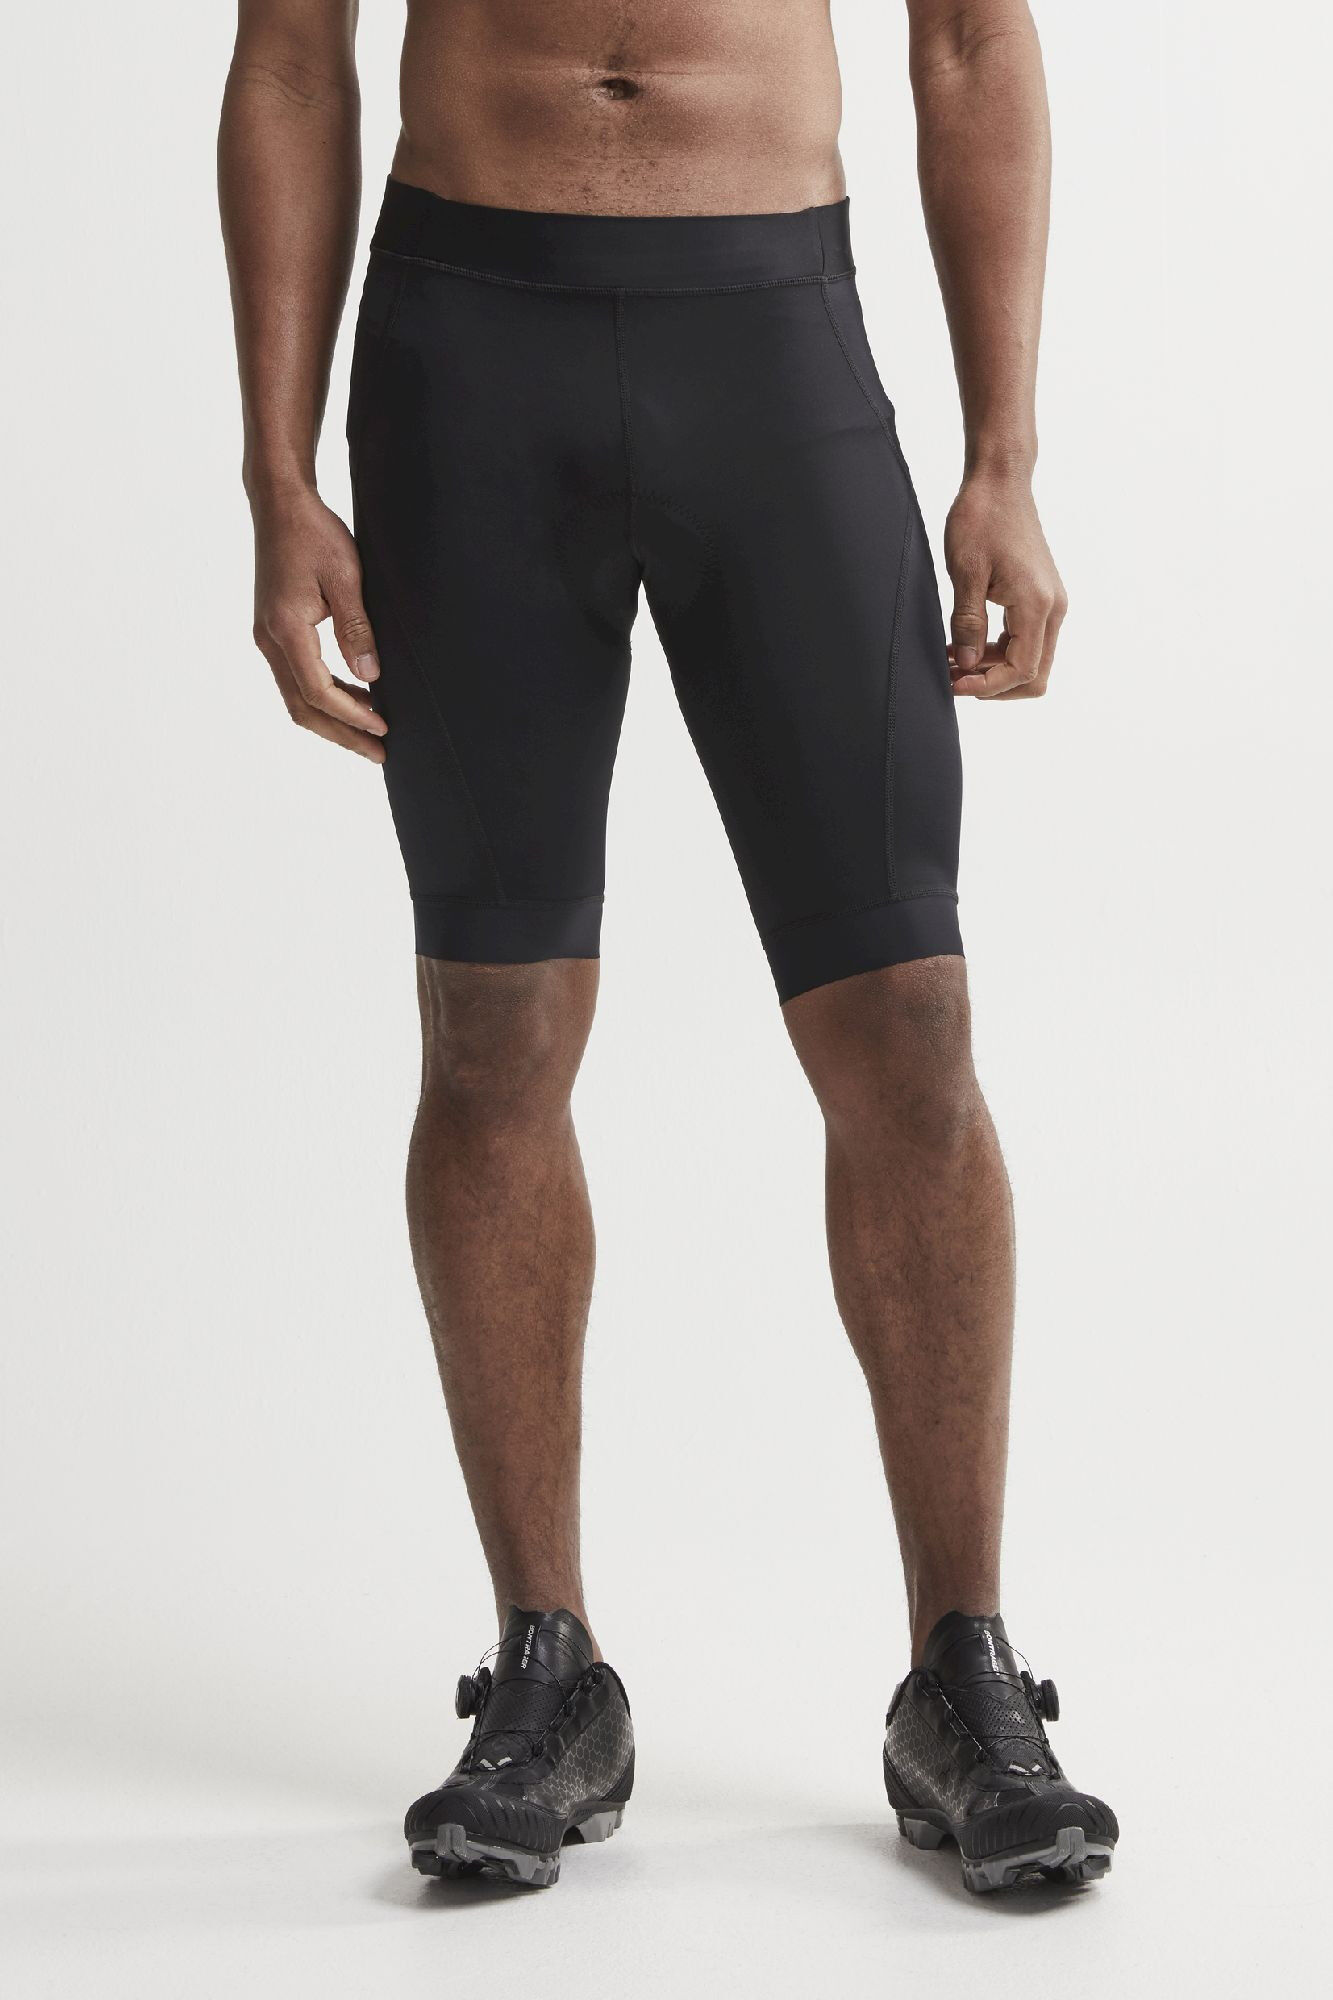 Craft Essence Shorts - Trail running shorts - Men's | Hardloop